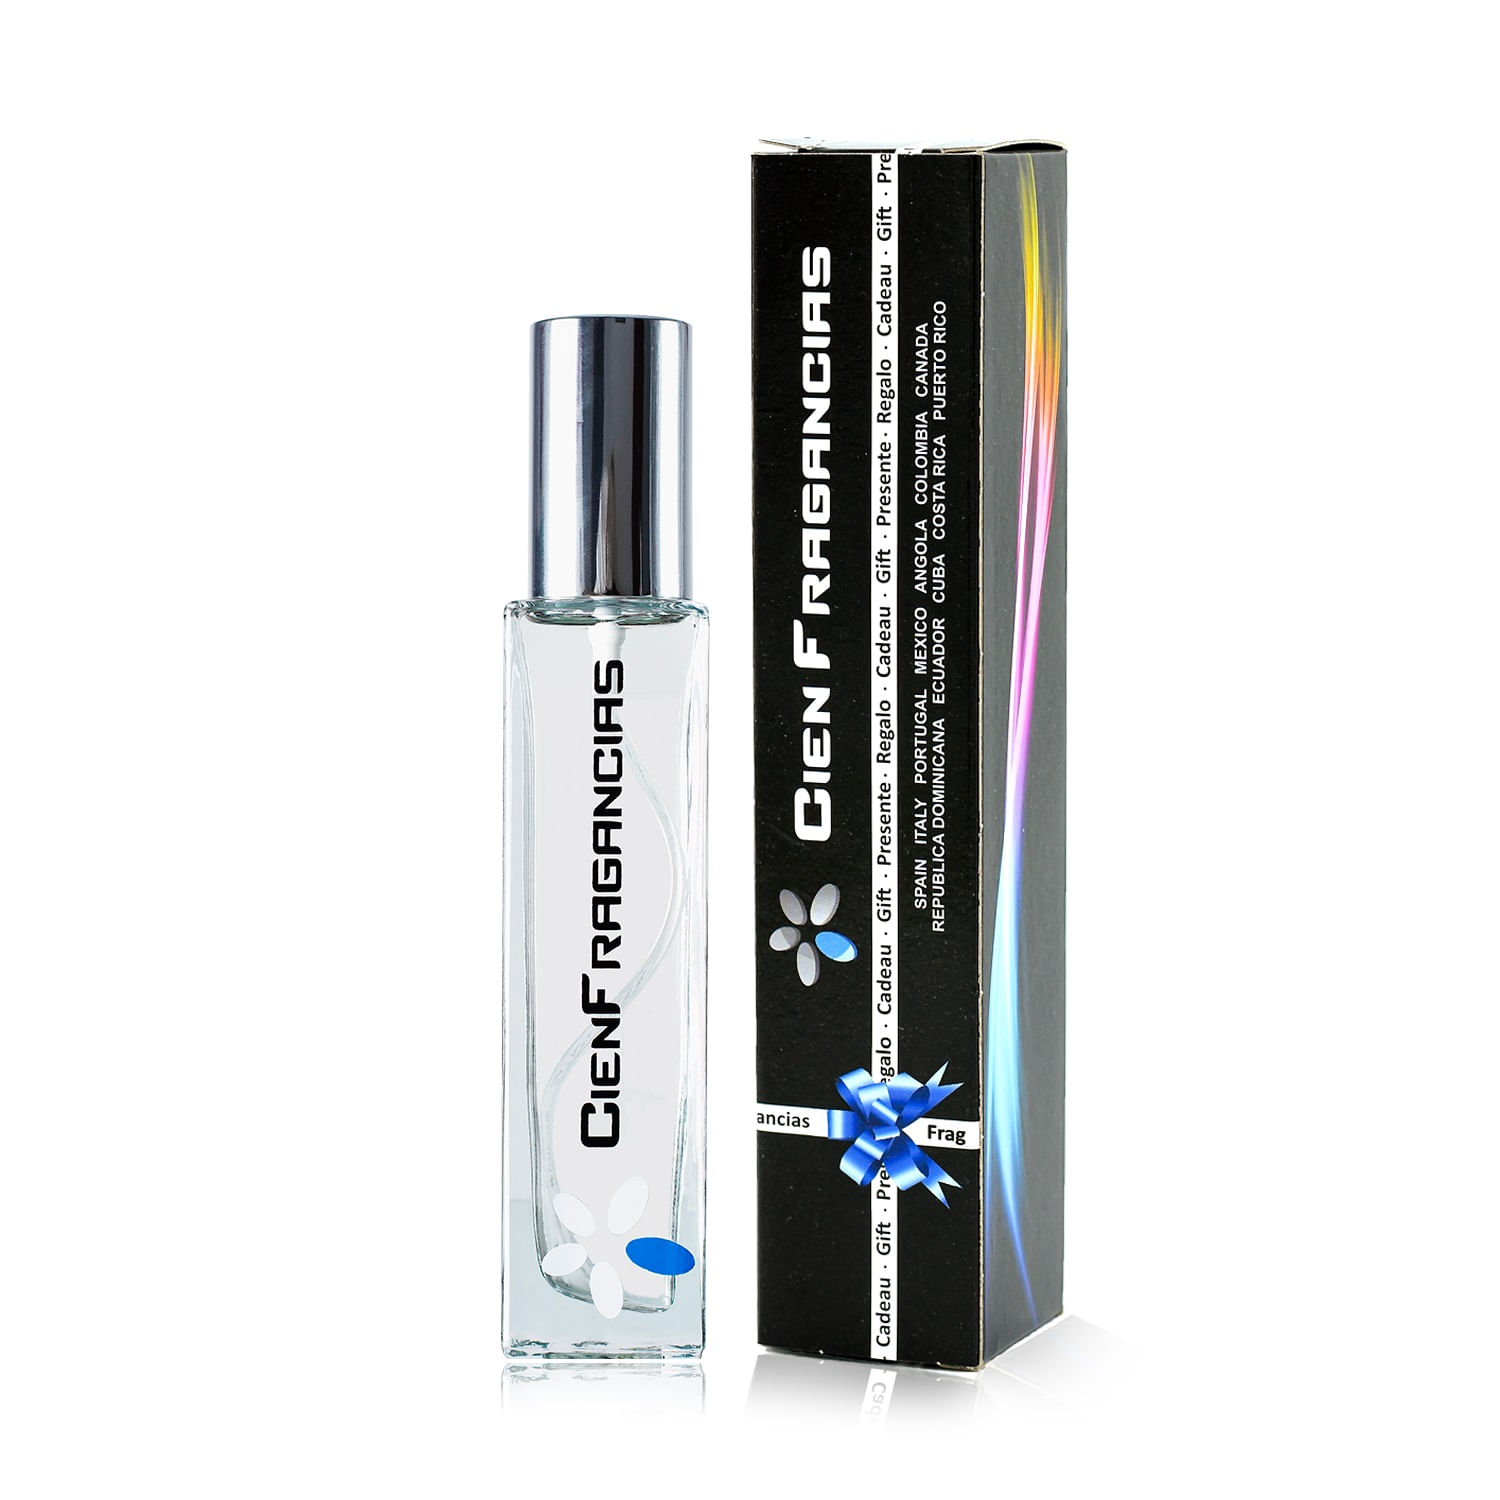 Perfume Cien Fragancias equivalente a Light Blue Pour Homme Dolce & Gabanna 2007